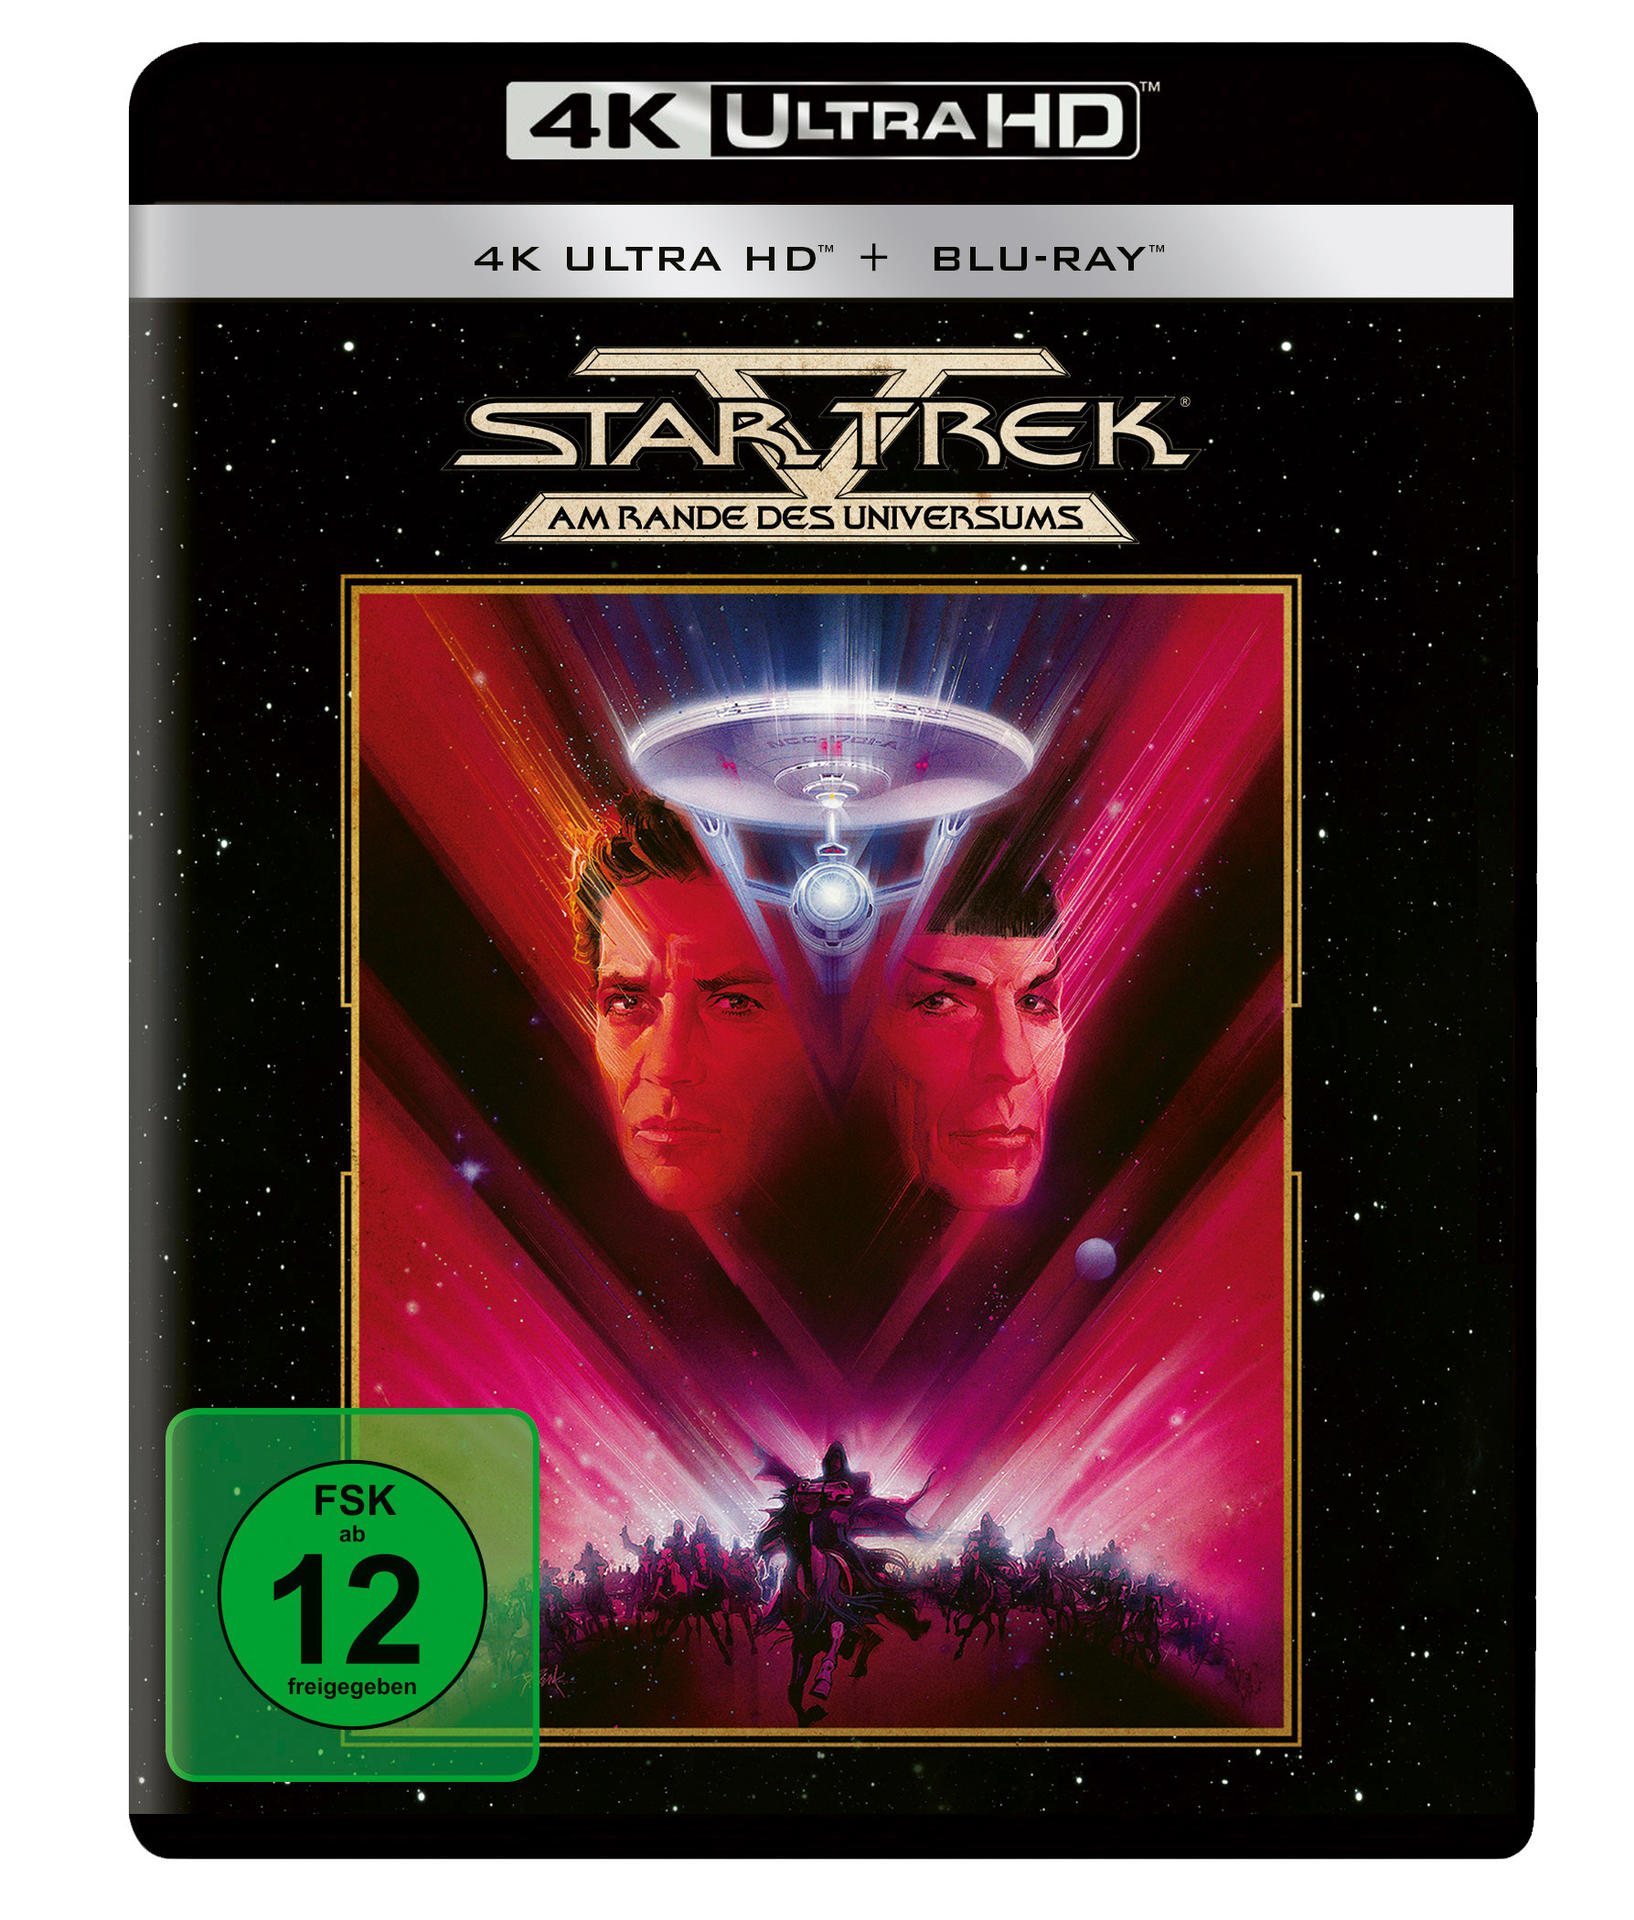 Ultra Am Blu-ray 4K - Star Trek Universum HD + Rande des Remastered V - Blu-ray